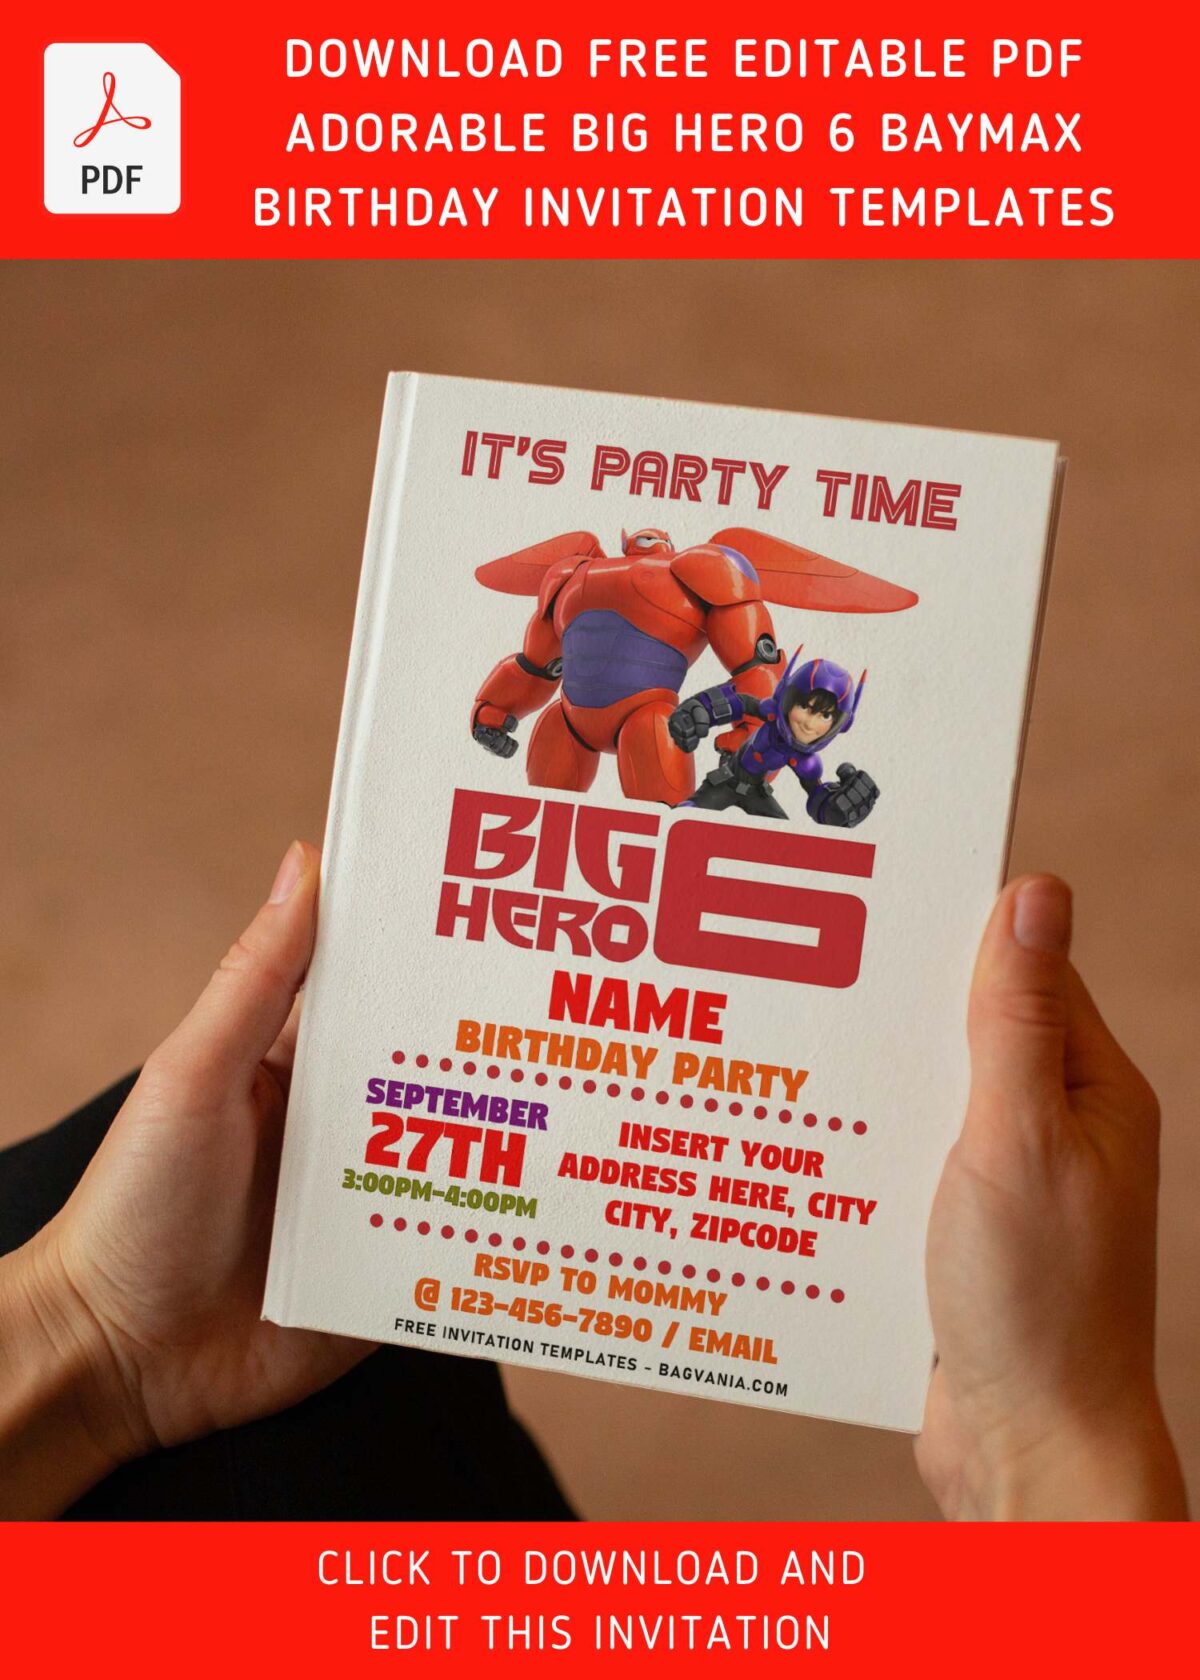 (Free Editable PDF) Adorable Big Hero 6 Baymax Birthday Invitation Templates with colorful text